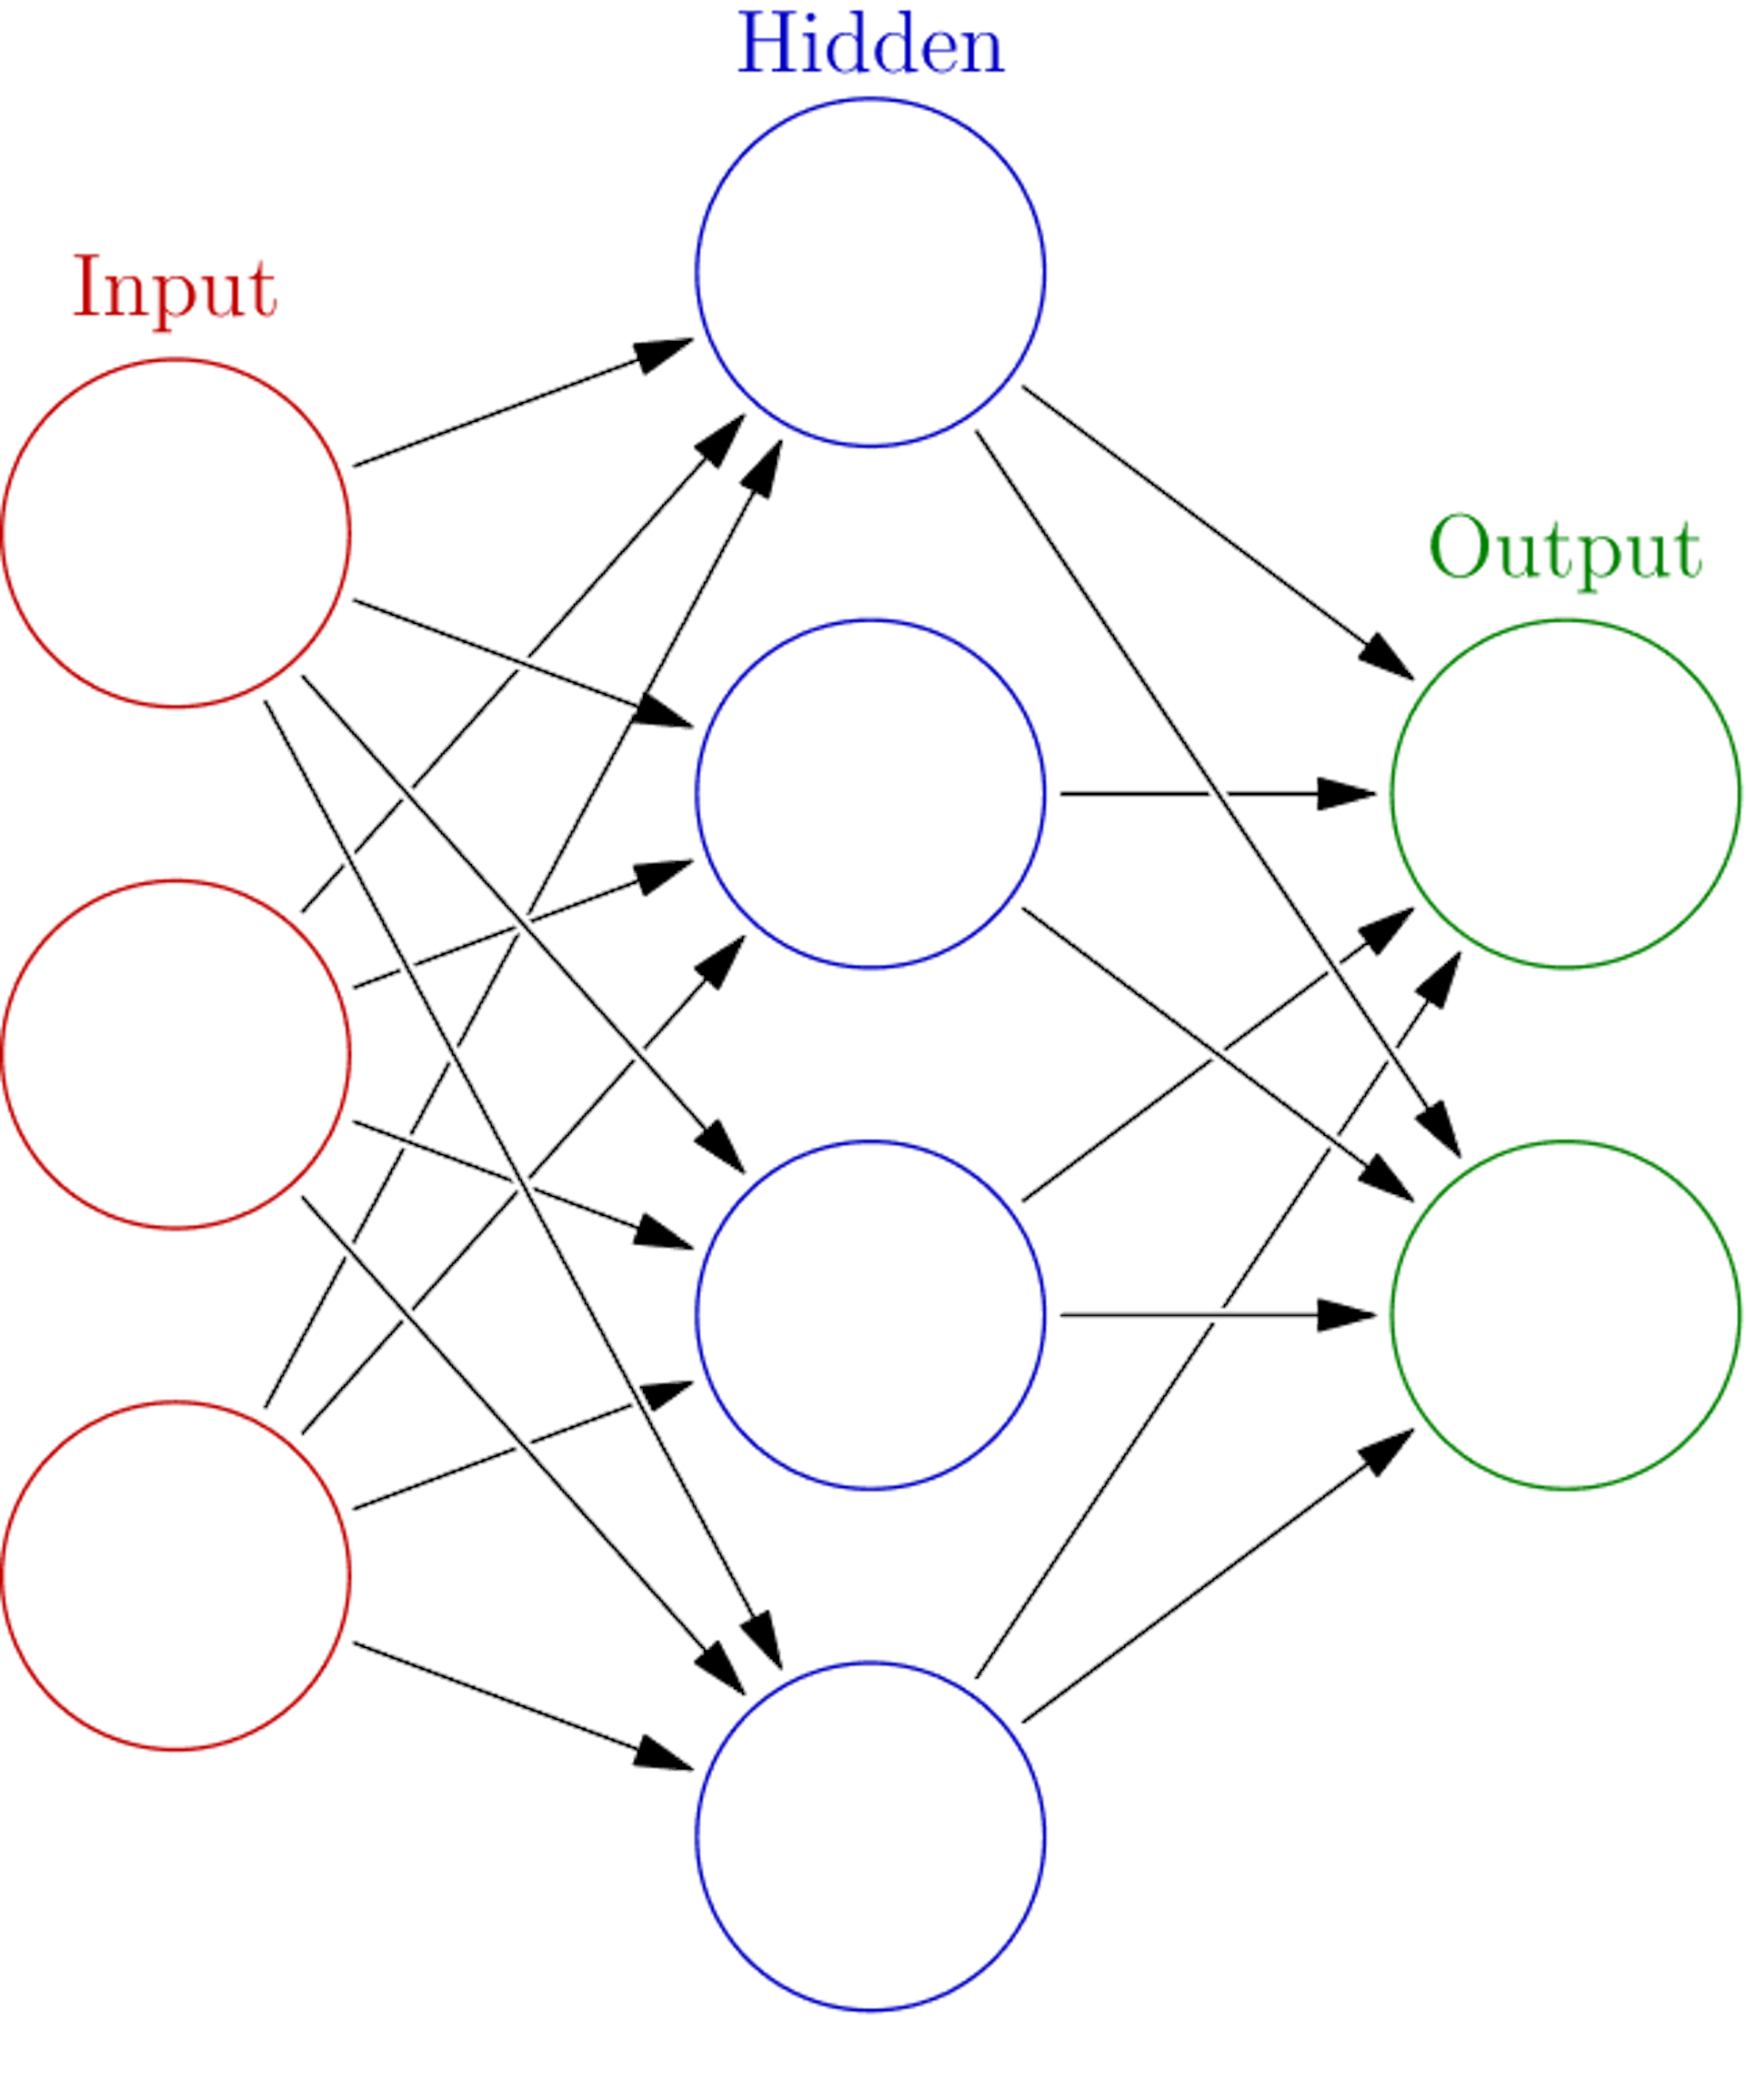 Presentación básica de cómo funciona la red neuronal (original: https://en.wikipedia.org/wiki/Neural_network_(machine_learning)#/media/File:Colored_neural_network.svg)